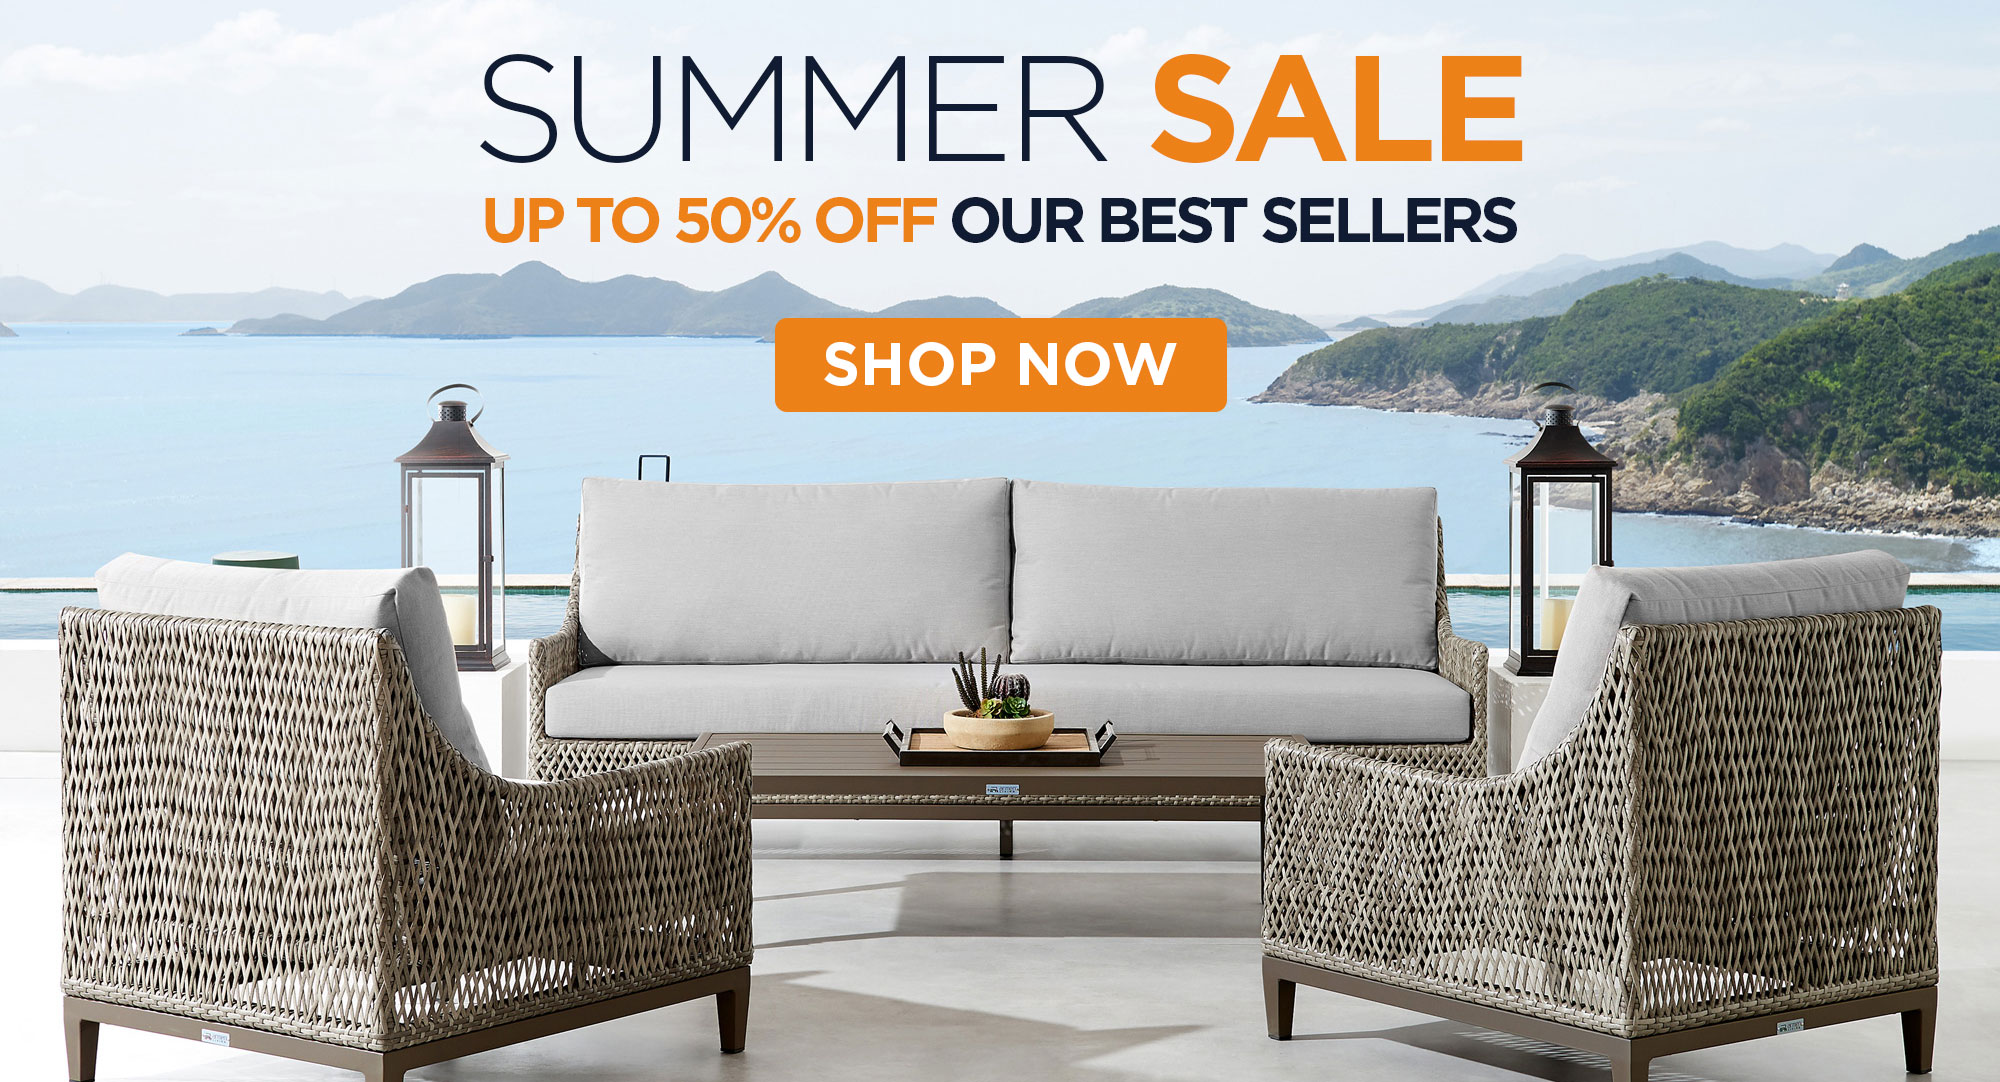 Homethreads Summer Outdoor Sale